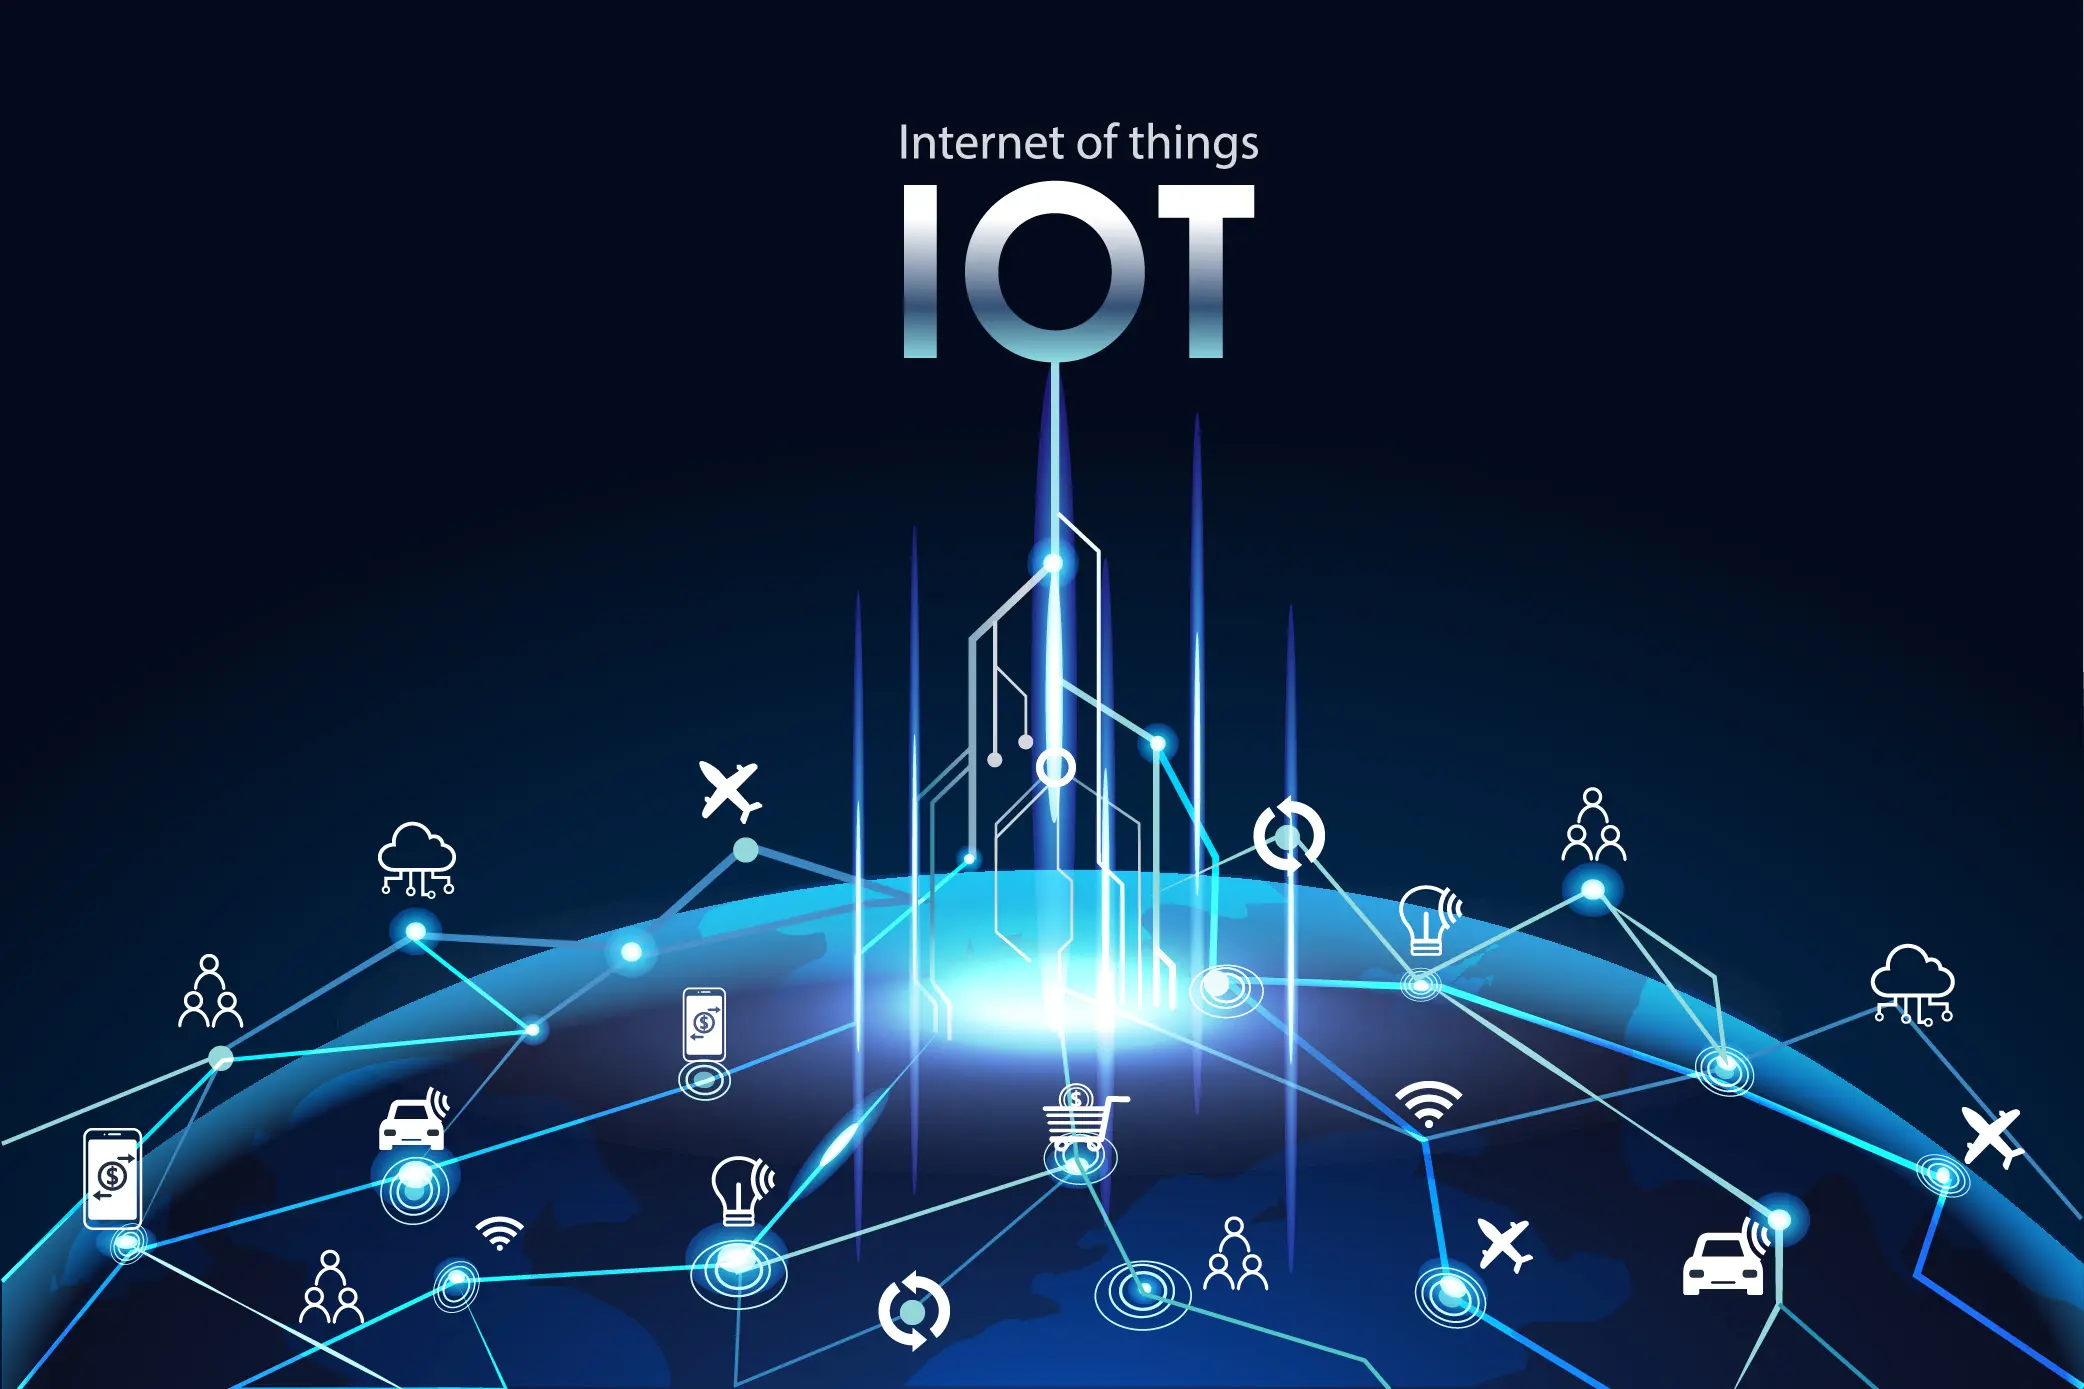 Ce este Internet of Things sau IoT?